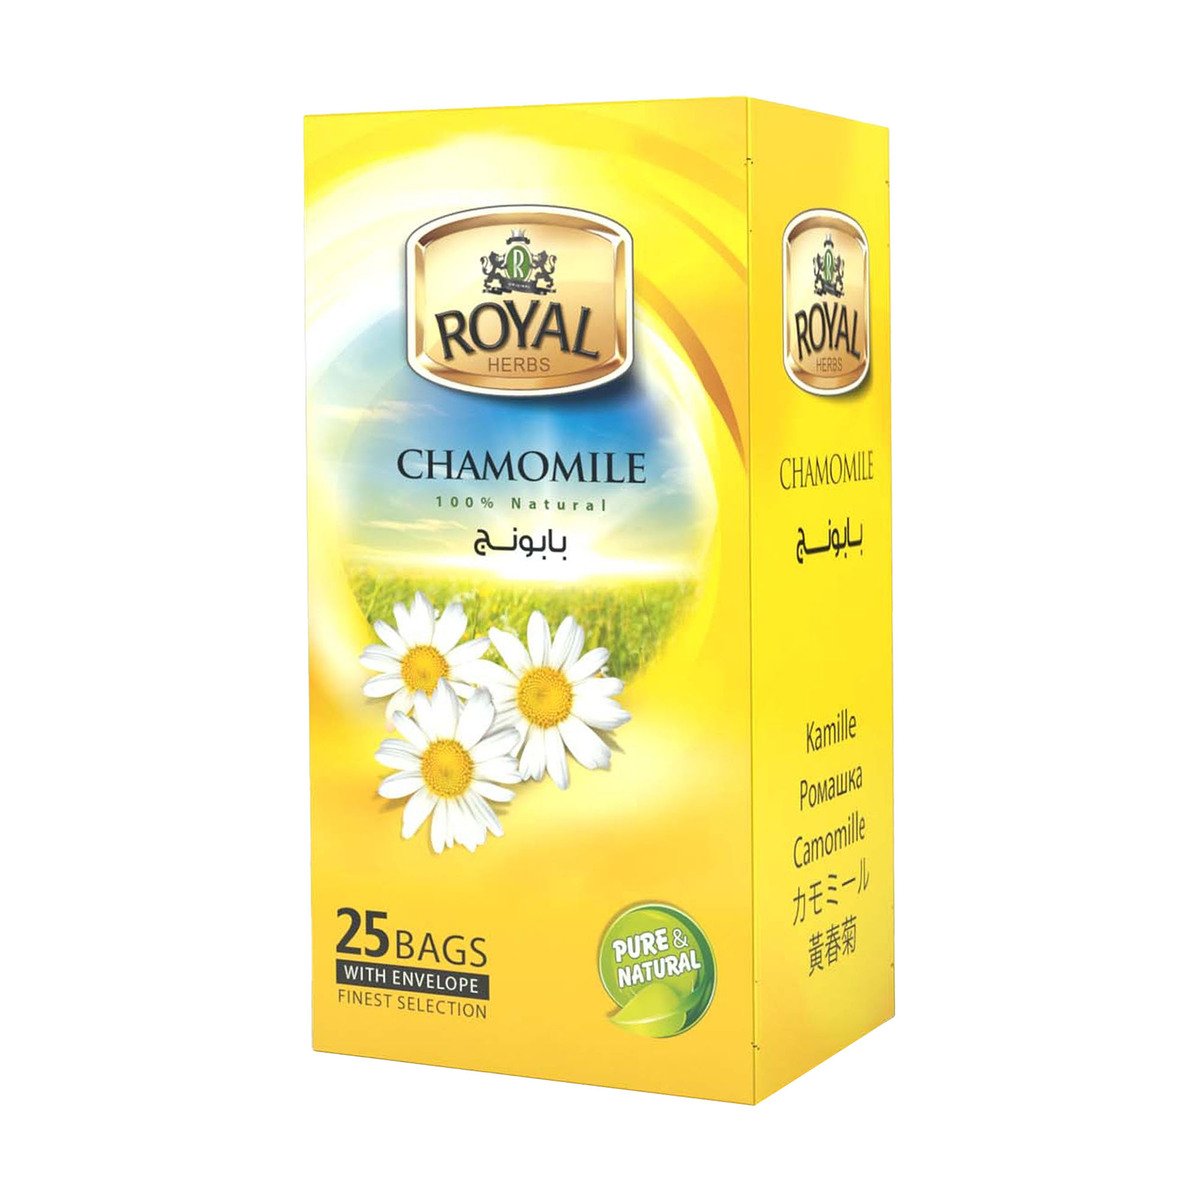 Royal Herbs Chamomile Tea 25 pcs